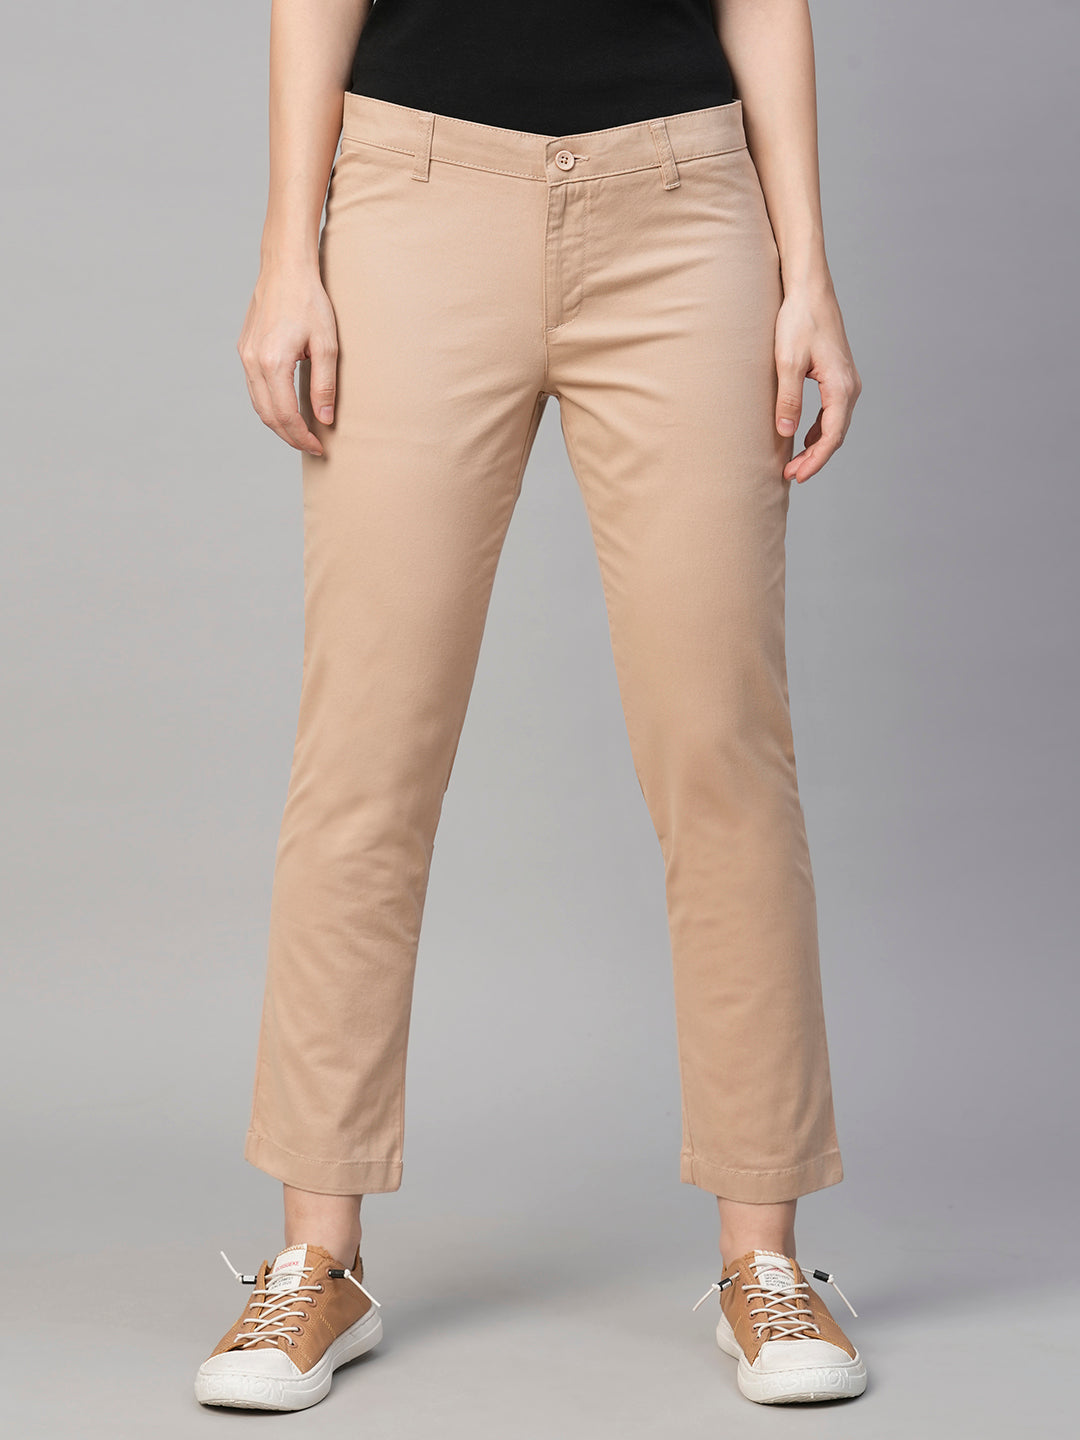 Women's Beige Cotton Lycra Regular Fit Pant